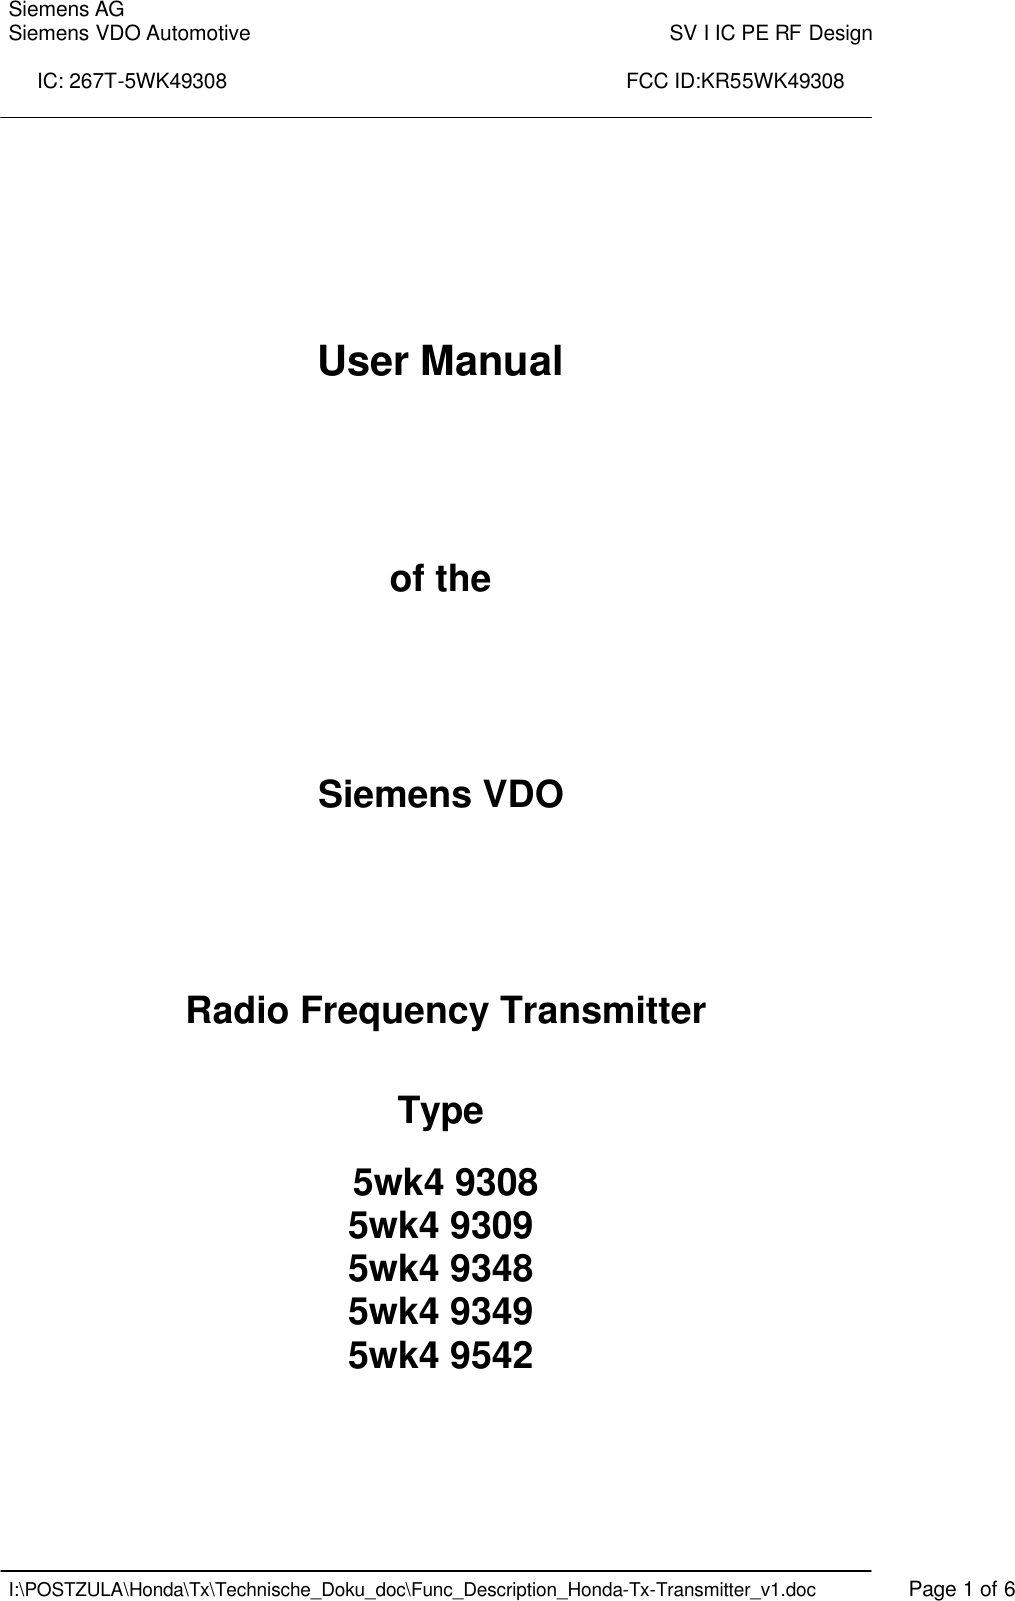 Siemens AG Siemens VDO Automotive    SV I IC PE RF Design  IC: 267T-5WK49308                                                                      FCC ID:KR55WK49308    I:\POSTZULA\Honda\Tx\Technische_Doku_doc\Func_Description_Honda-Tx-Transmitter_v1.doc    Page 1 of 6     User Manual     of the     Siemens VDO     Radio Frequency Transmitter   Type   5wk4 9308 5wk4 9309 5wk4 9348 5wk4 9349 5wk4 9542    